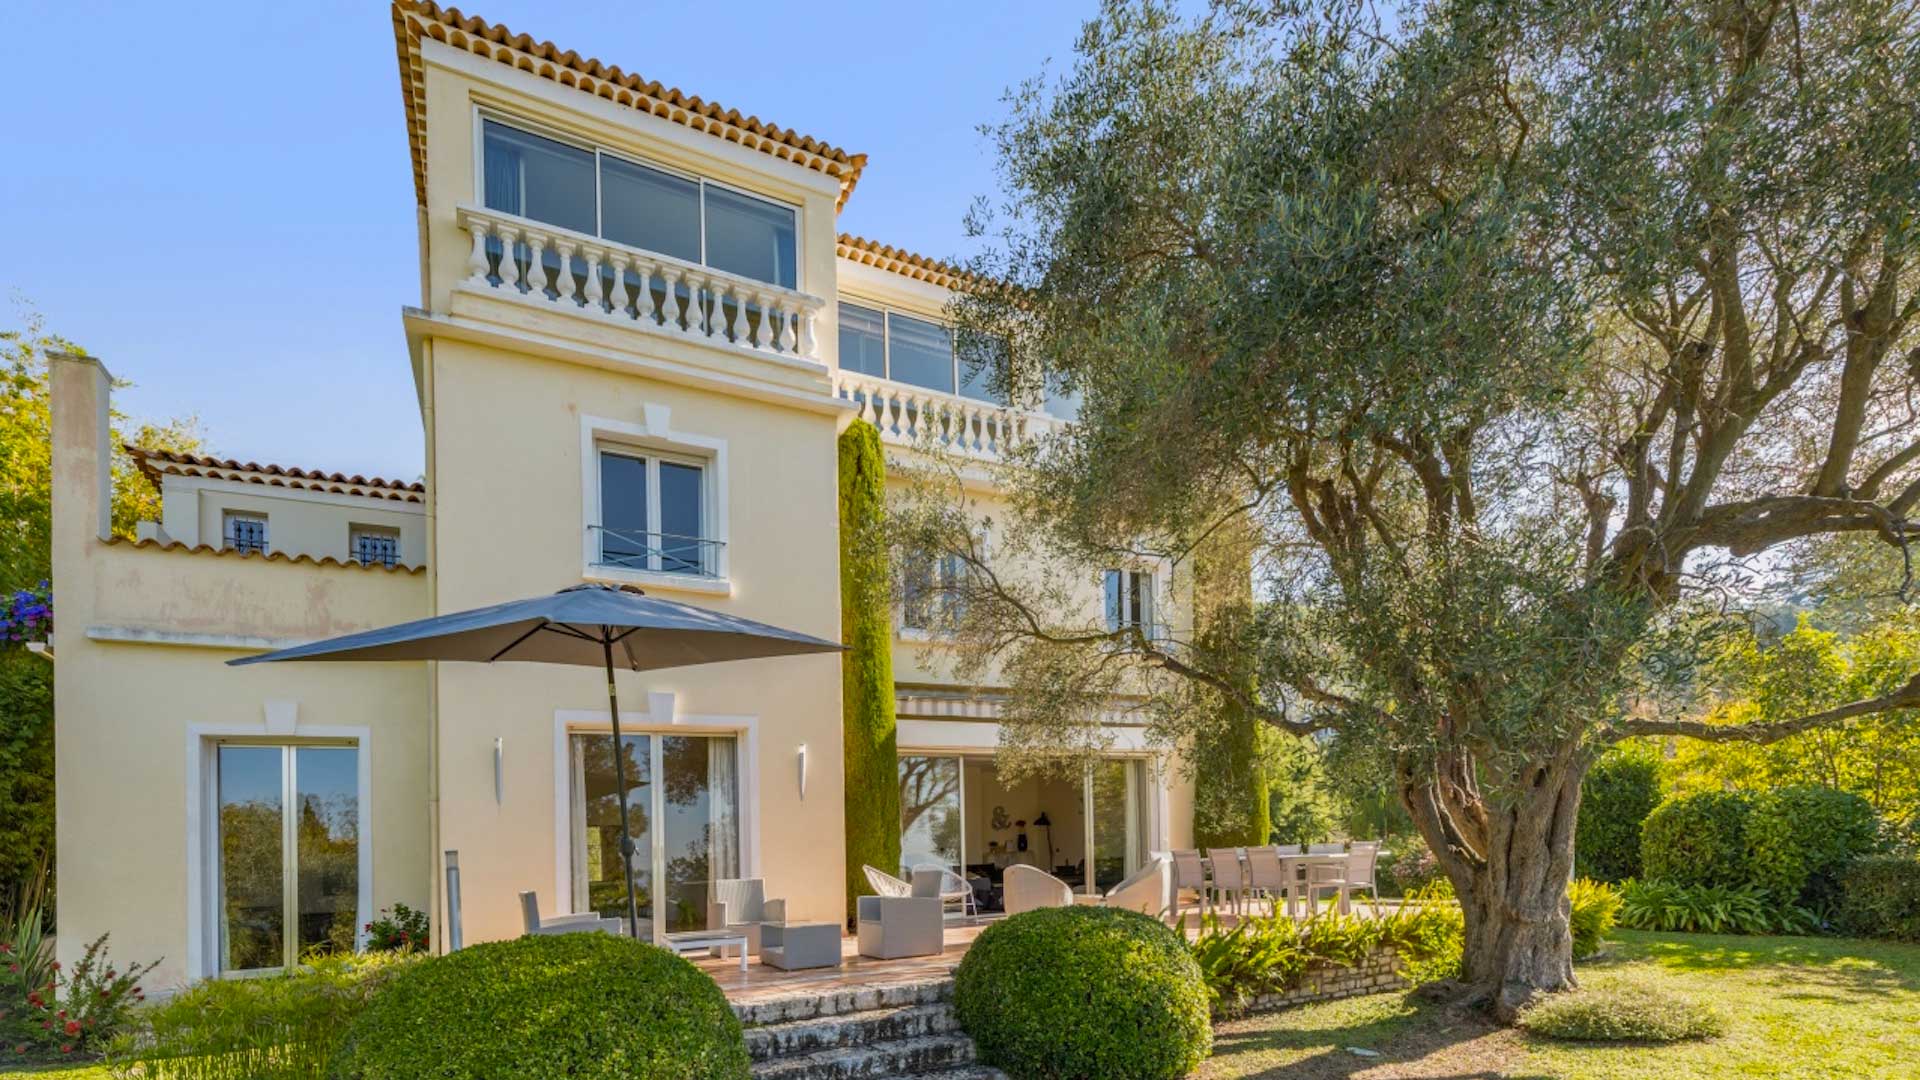 Photos of villa Fontaine Saint-Georges in French Riviera | Villanovo